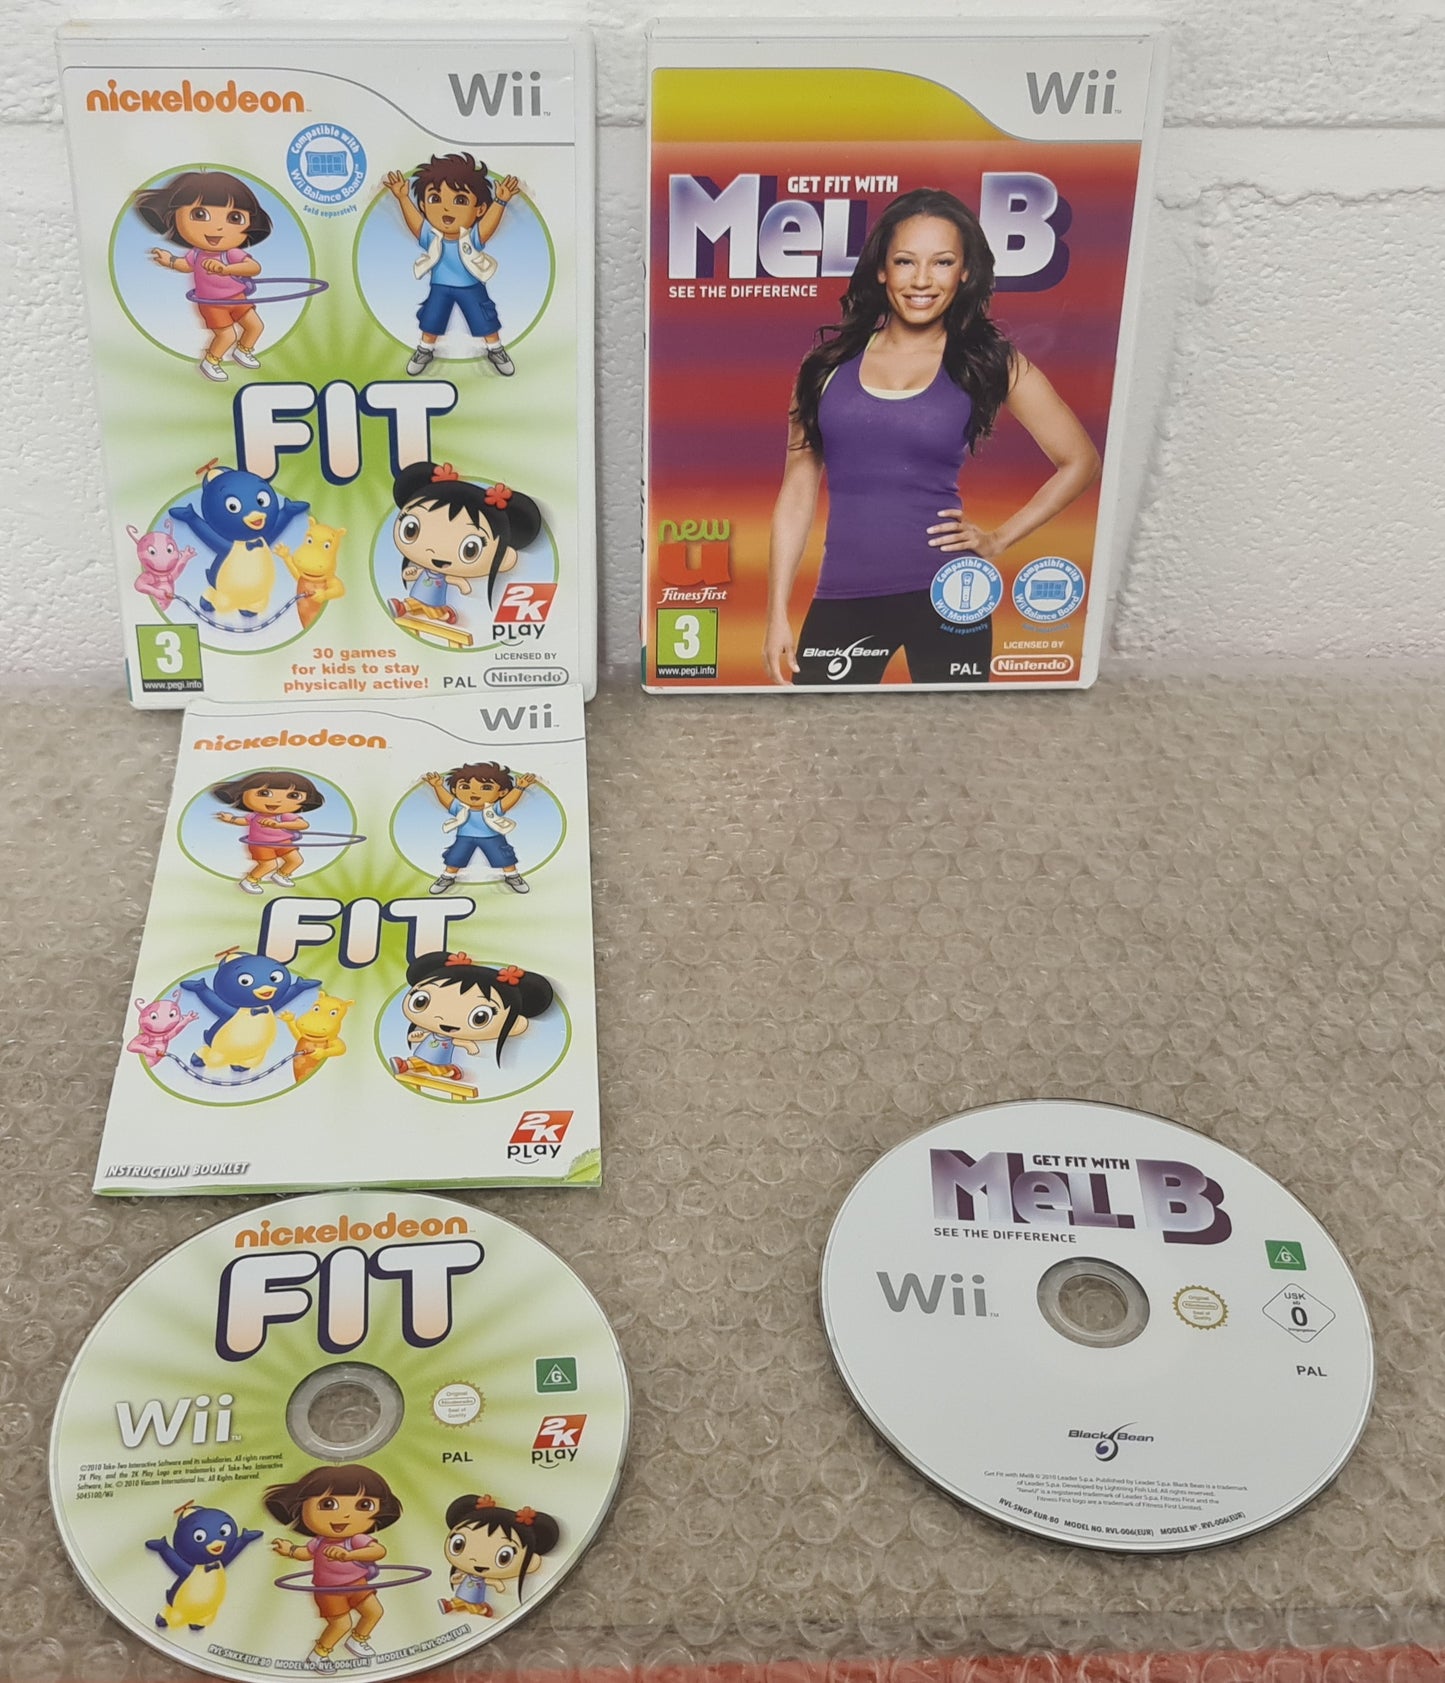 Nickelodeon Fit & Get fit with Mel B Nintendo Wii Game Bundle